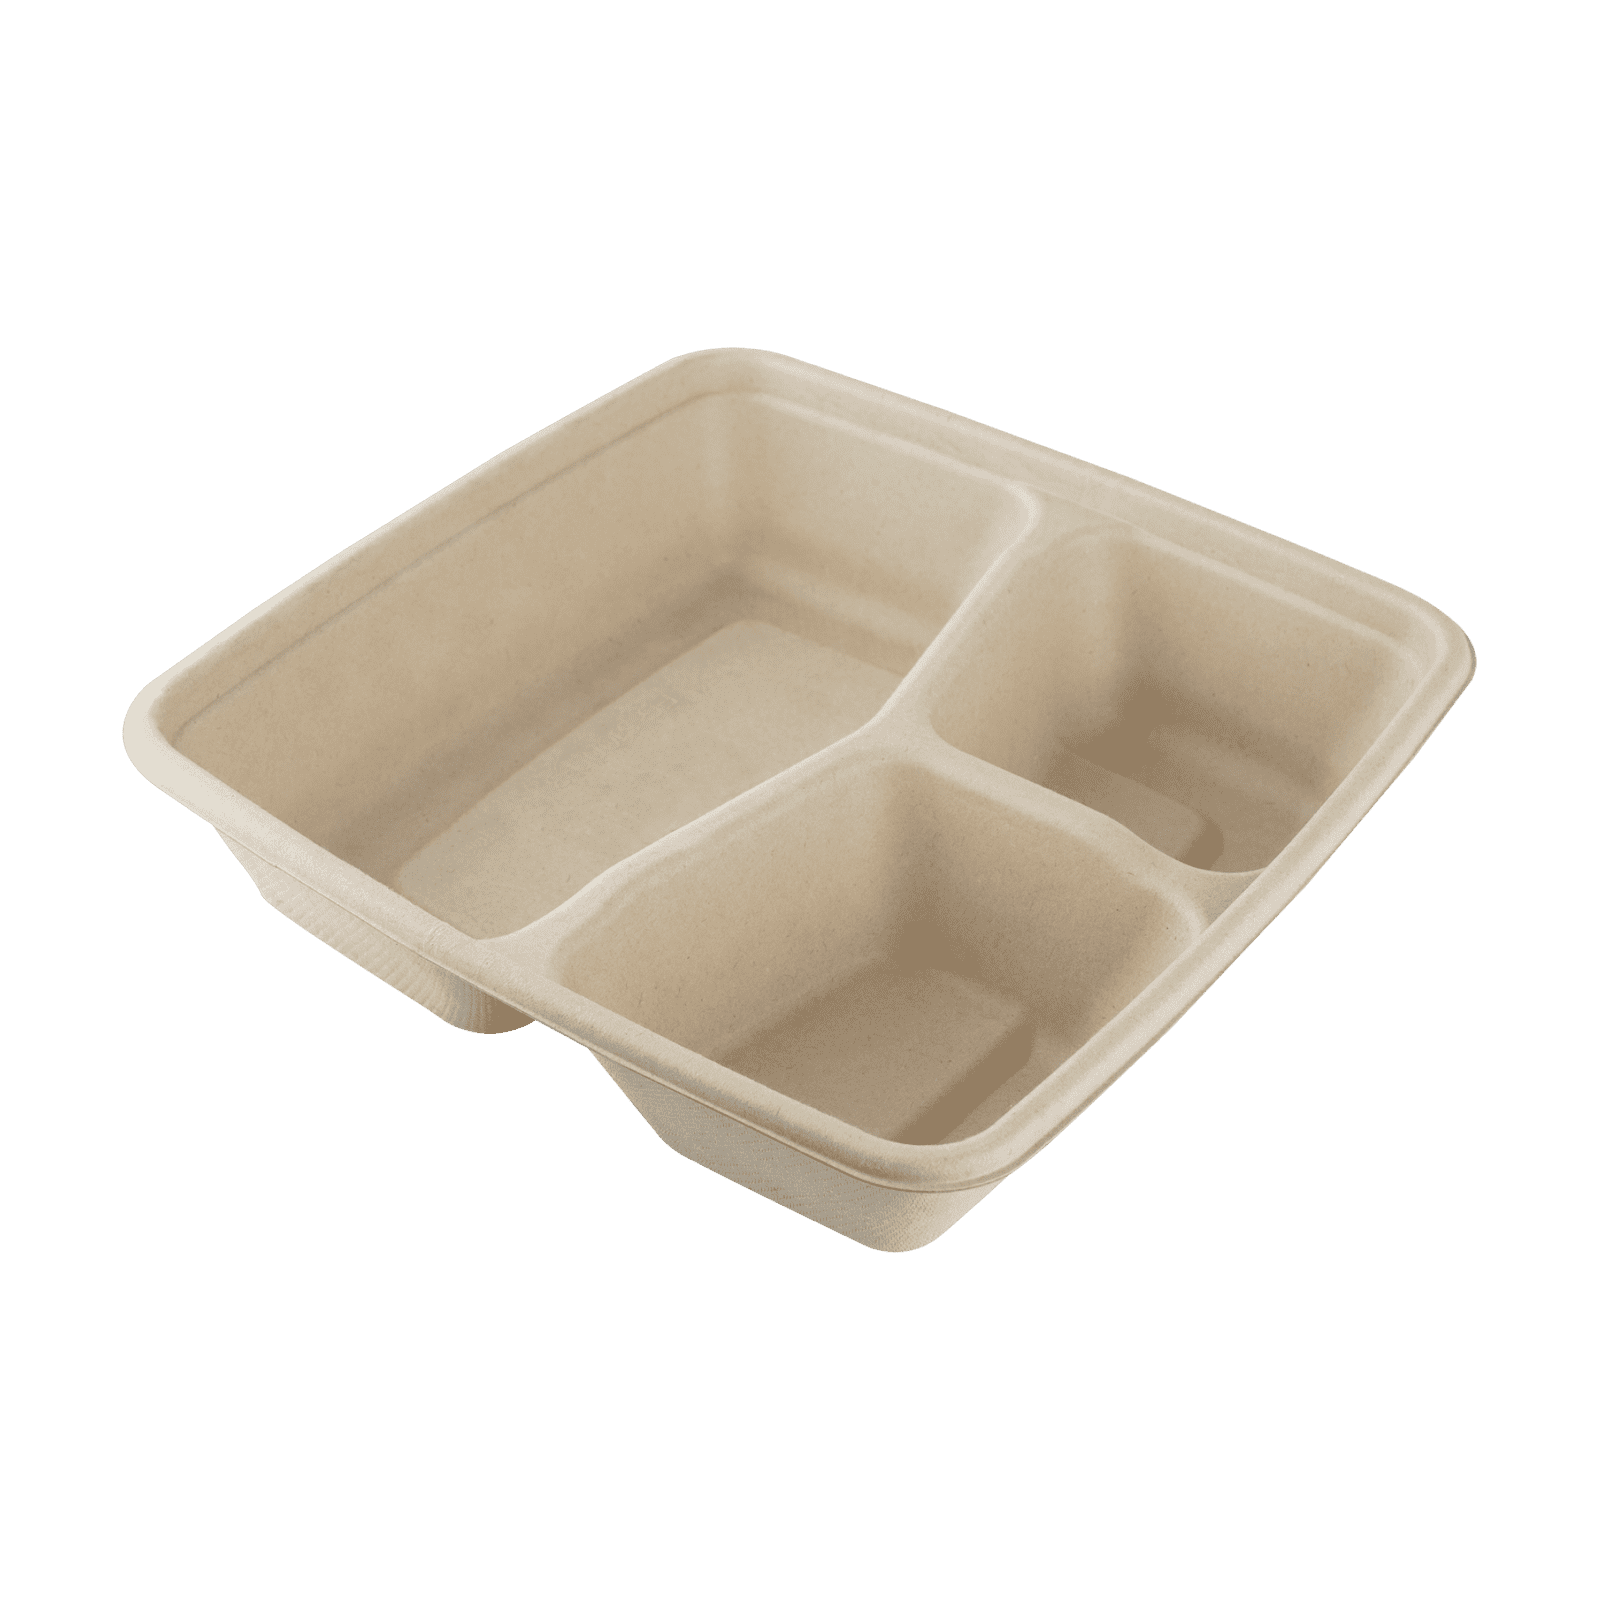 Enpak compostable food packaging square 1400ml 3 compartment CS-1400-3